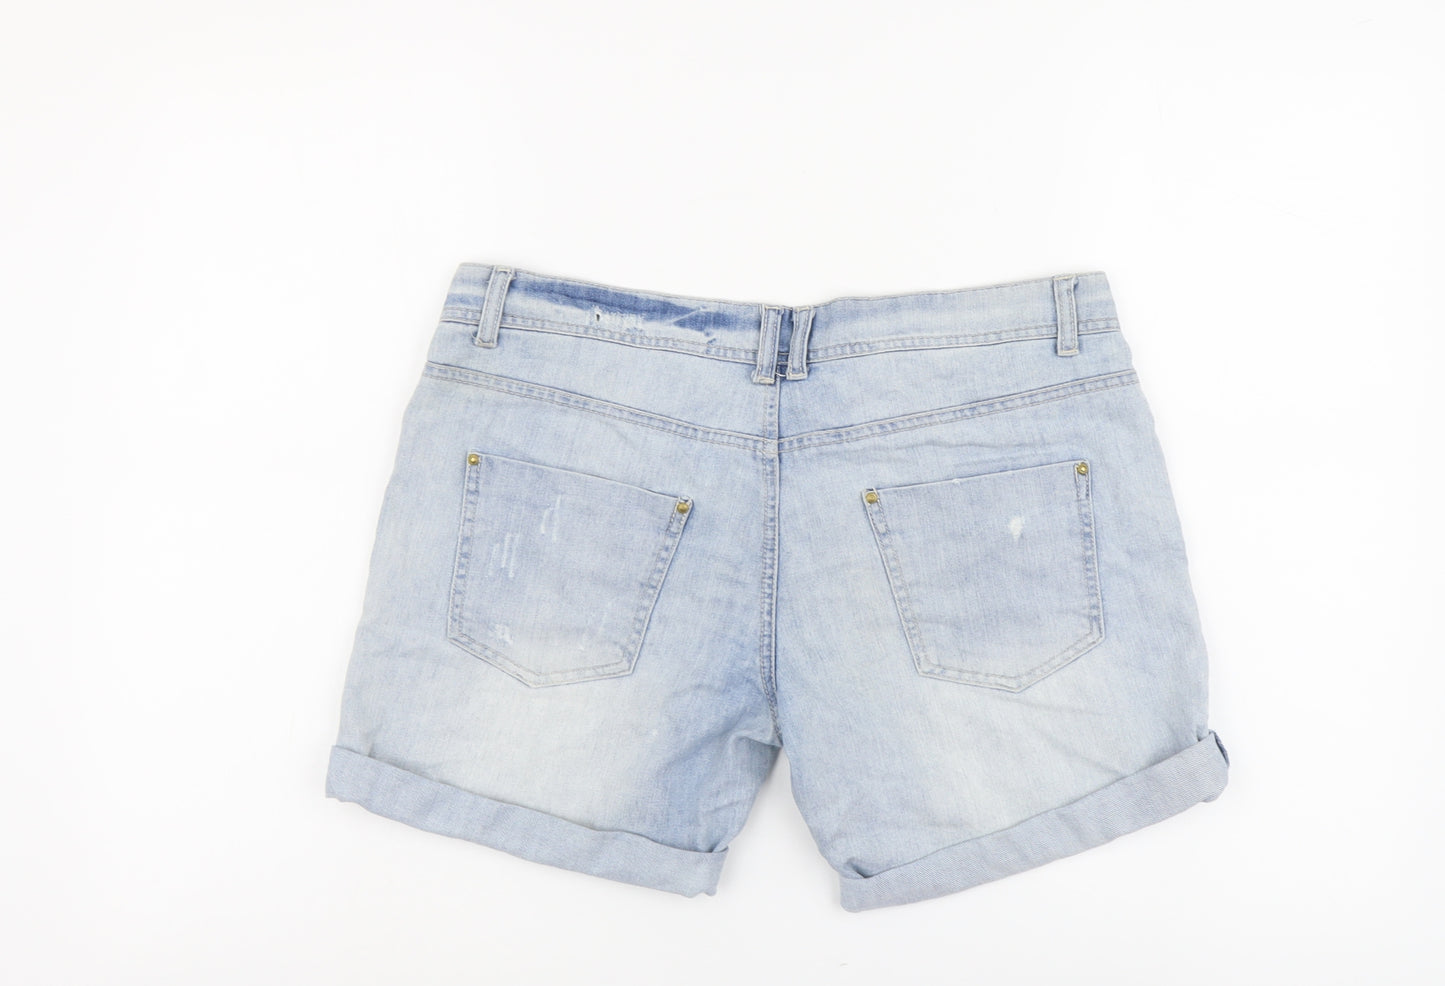 Denim & Co. Womens Blue Cotton Hot Pants Shorts Size 10 L5 in Regular Button